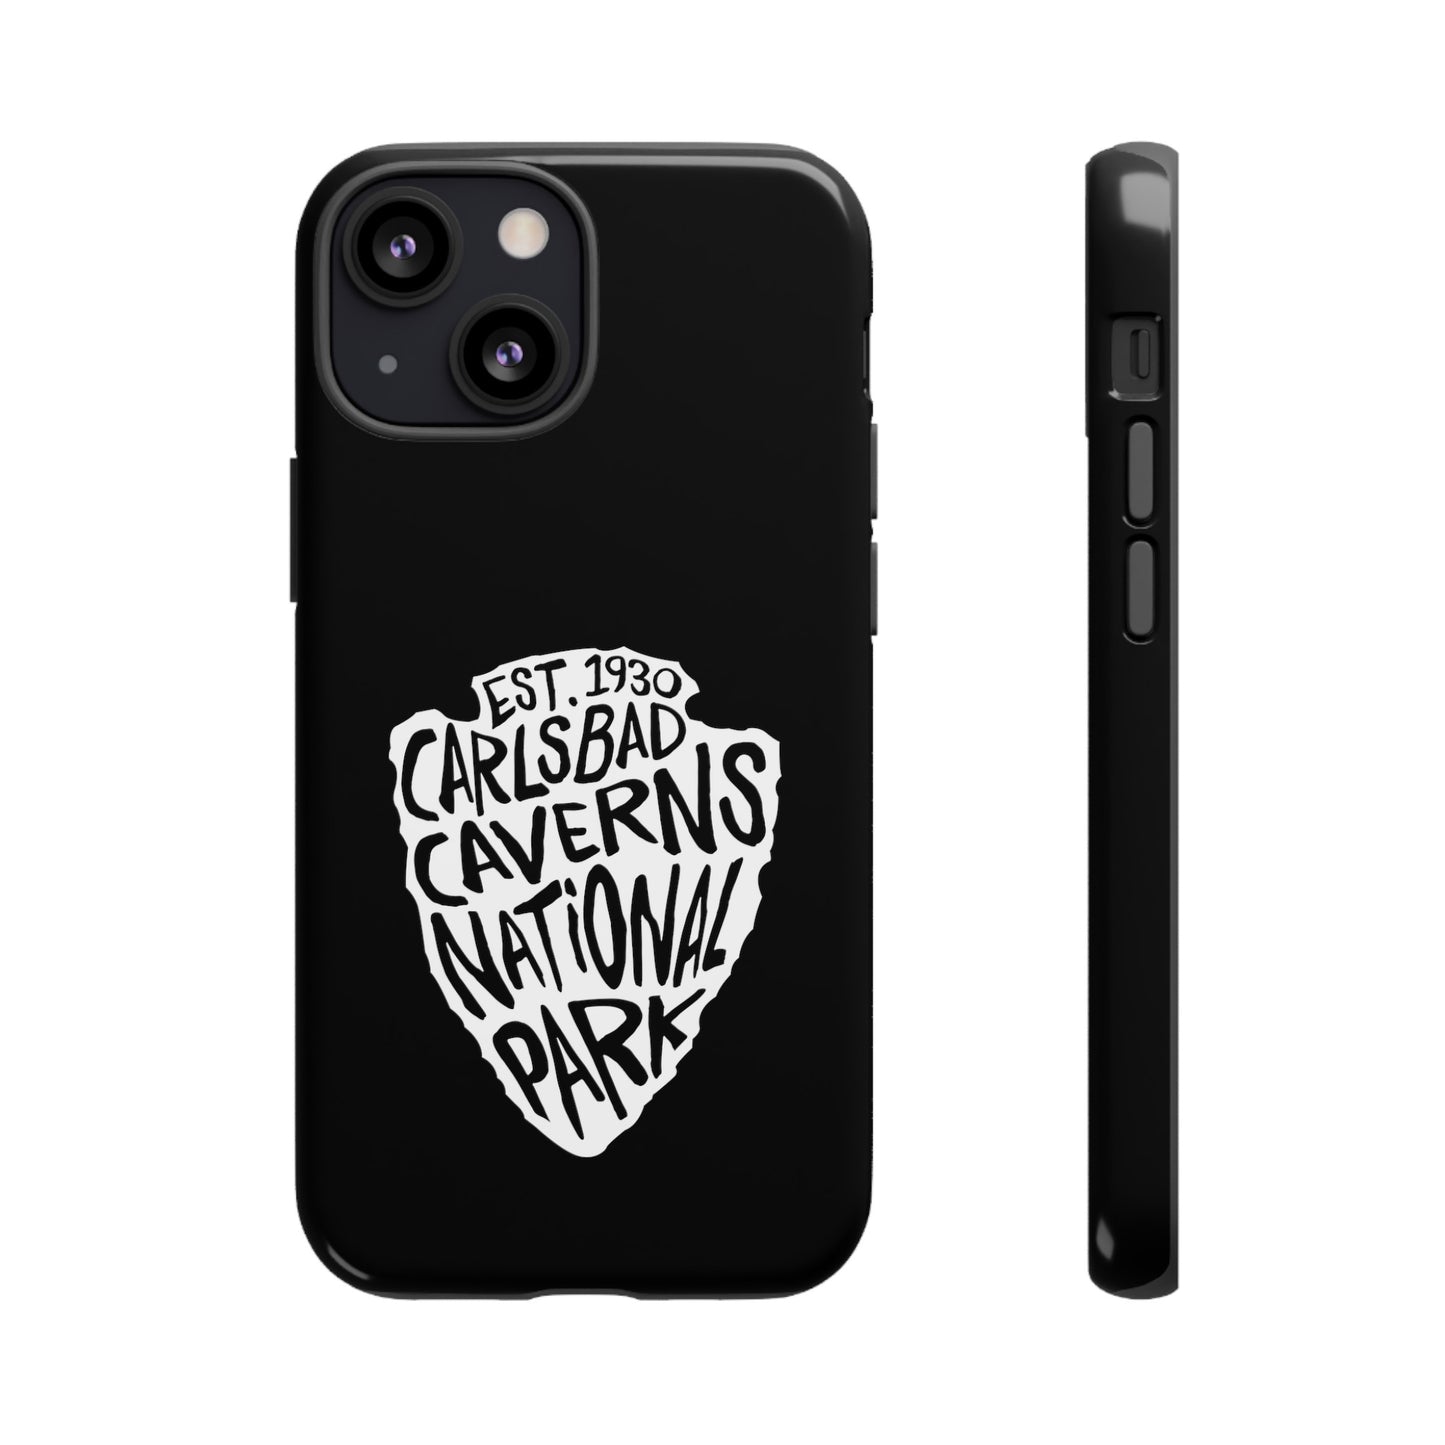 Carlsbad Caverns National Park Phone Case - Arrowhead Design